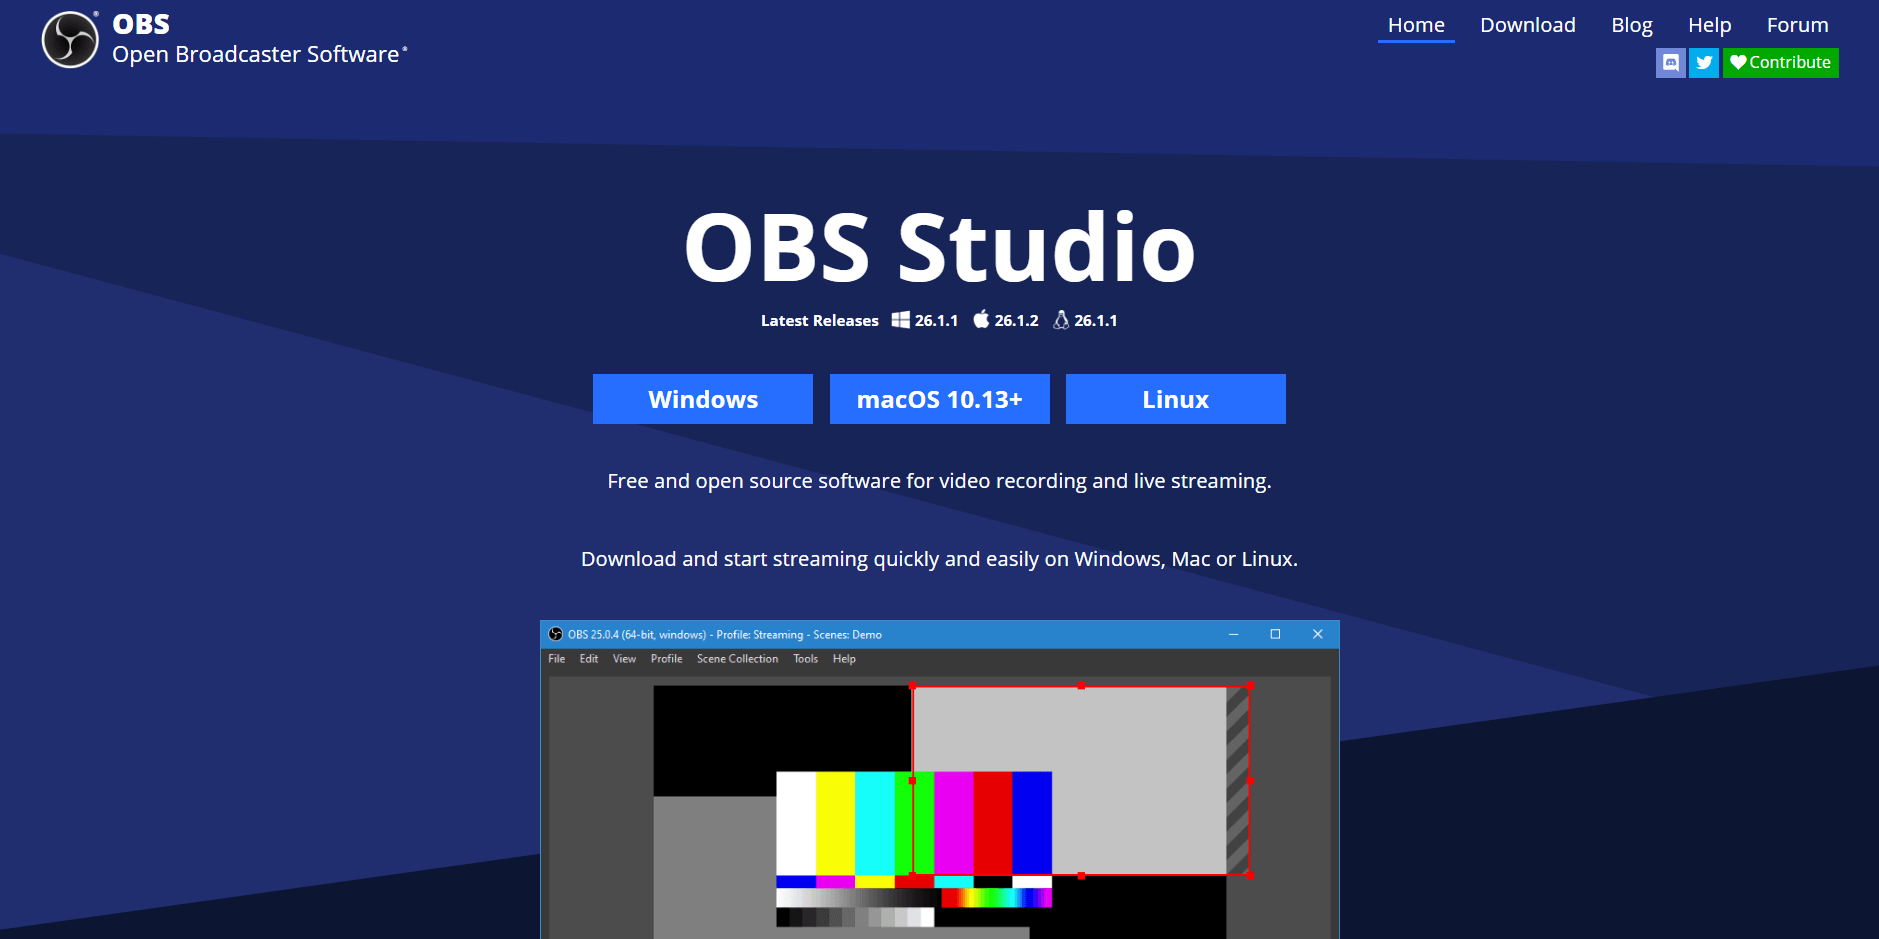 Tải phần mềm livestream OBS Studio tại trang chủ - GEARVN.COM